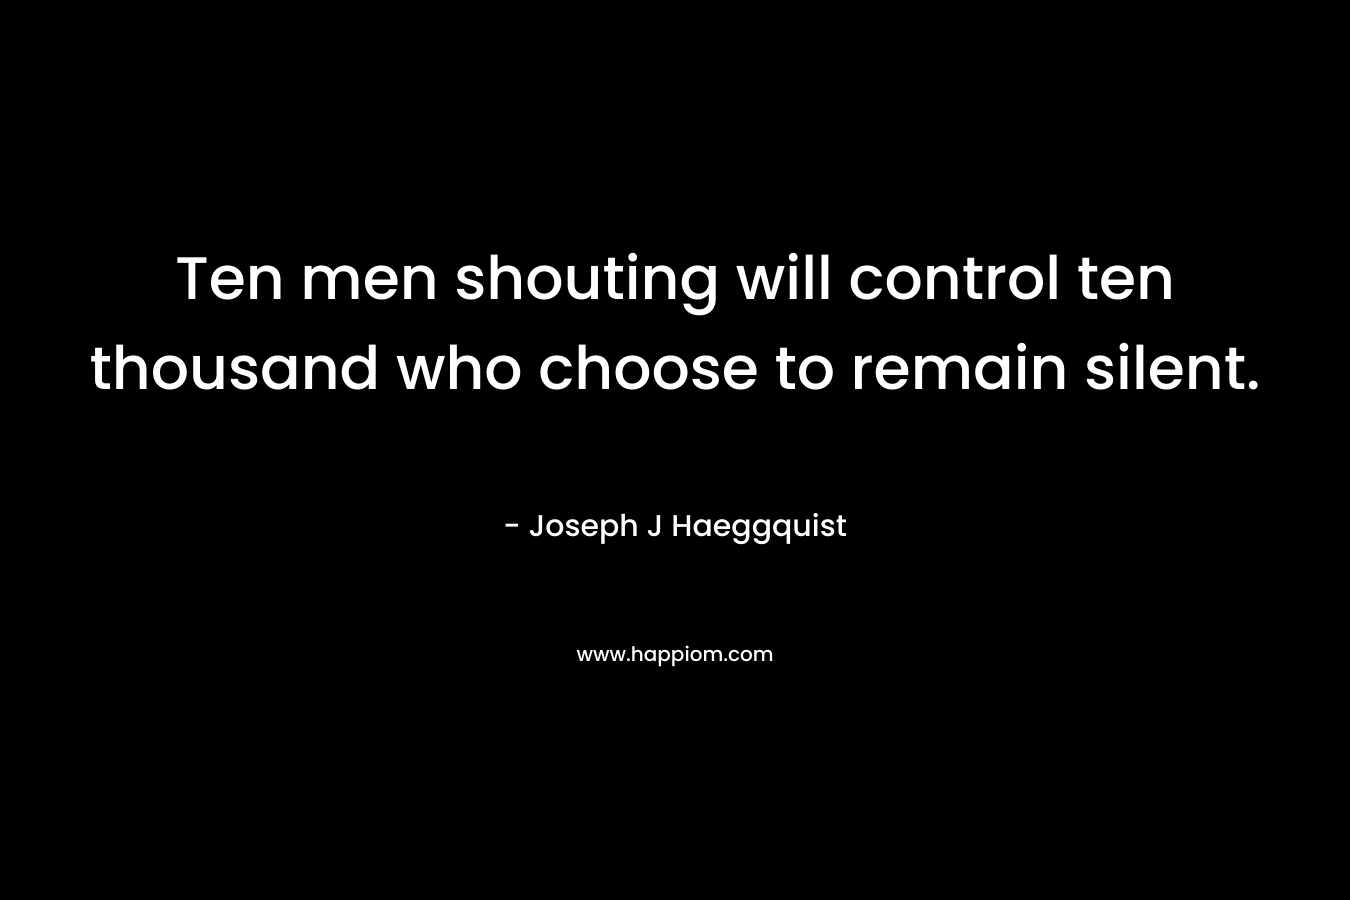 Ten men shouting will control ten thousand who choose to remain silent.